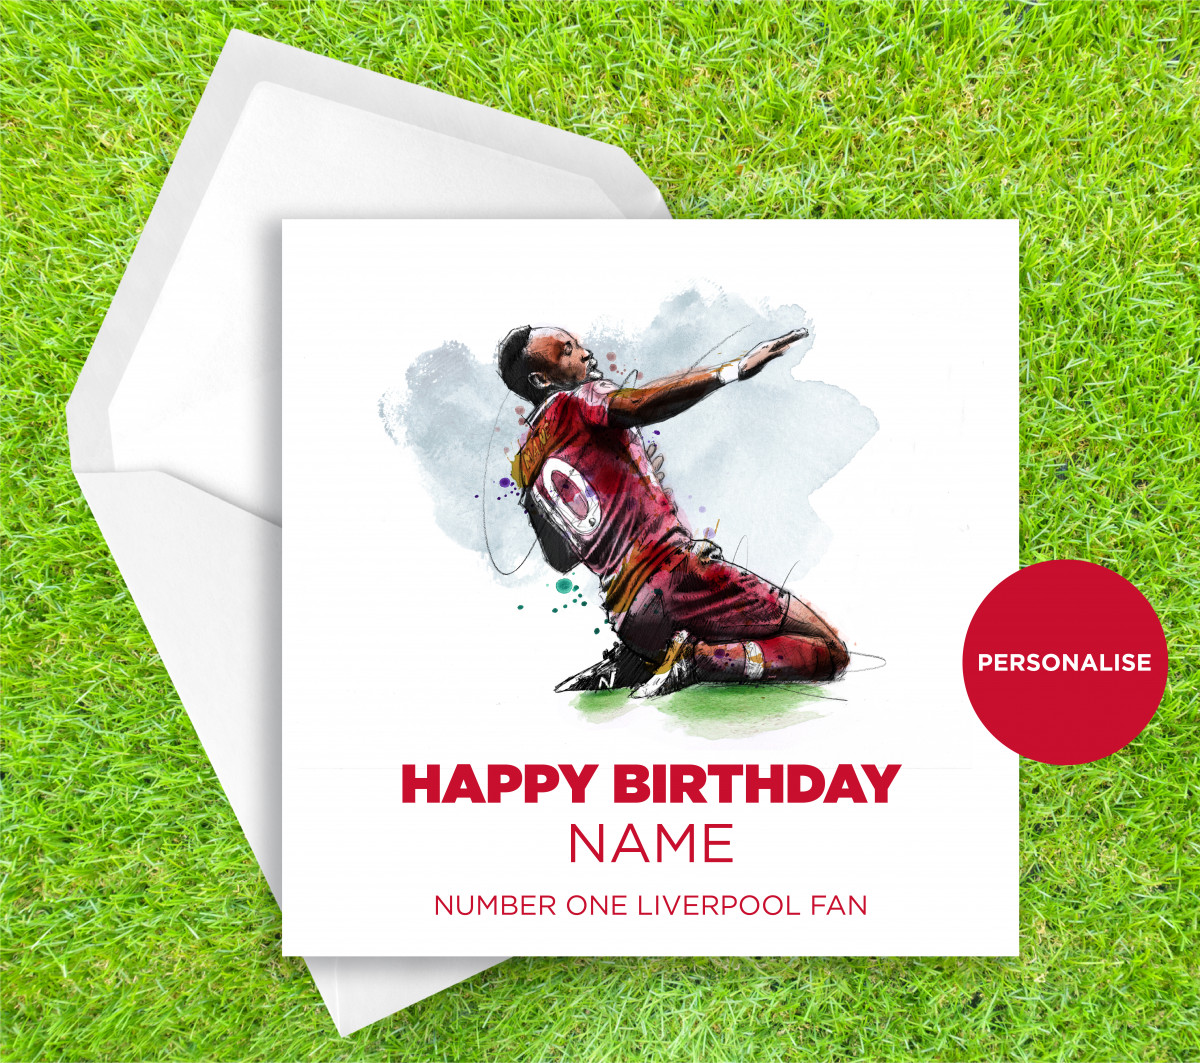 Liverpool FC, Sadio Mané, personalised birthday card